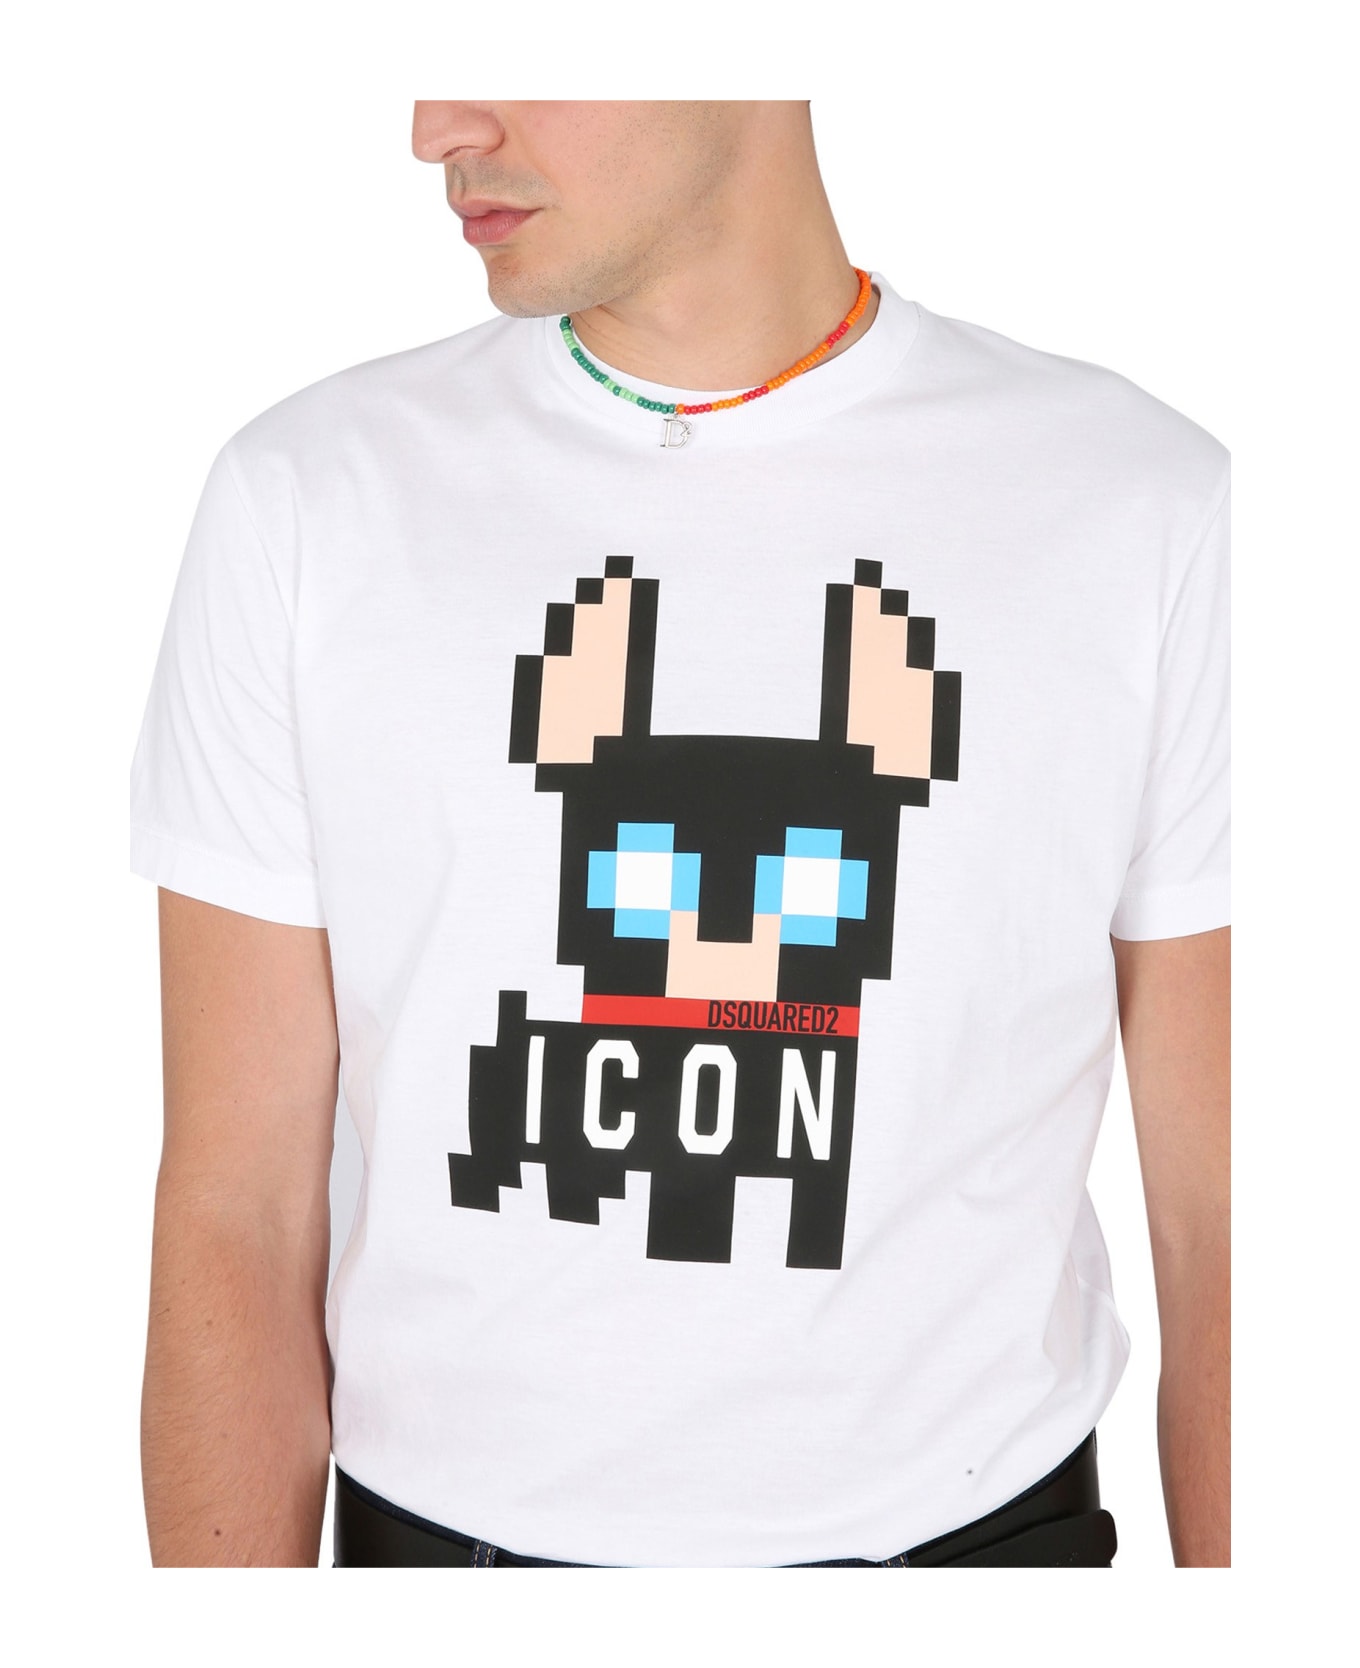 Dsquared2 Icon Ciro Cool T-shirt - White シャツ